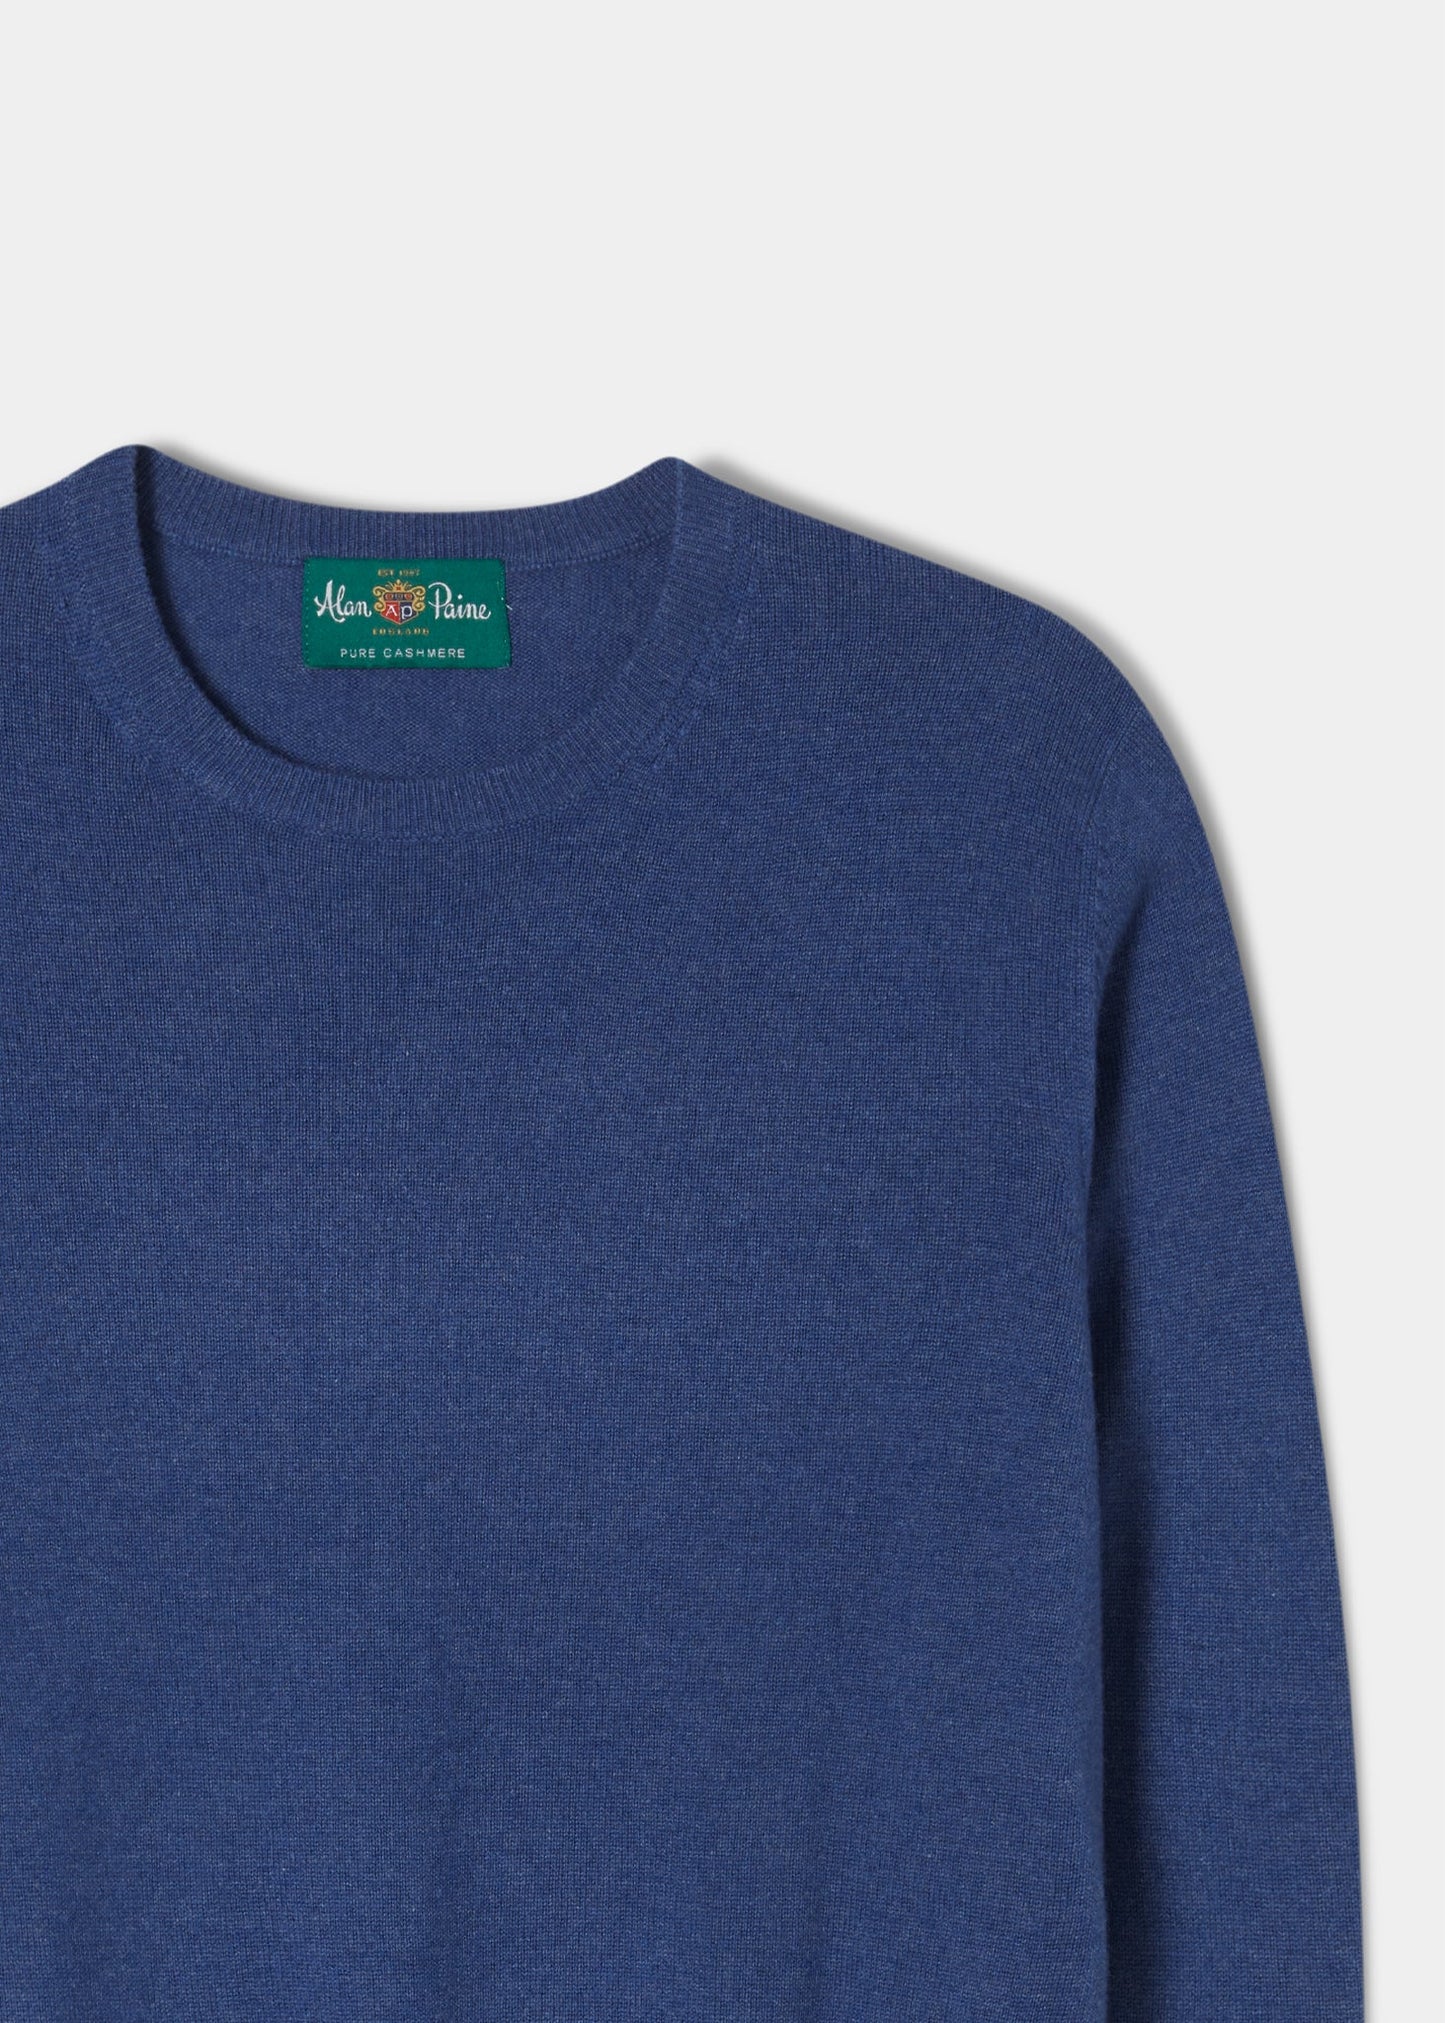 Cashmere-Sweater-Denim